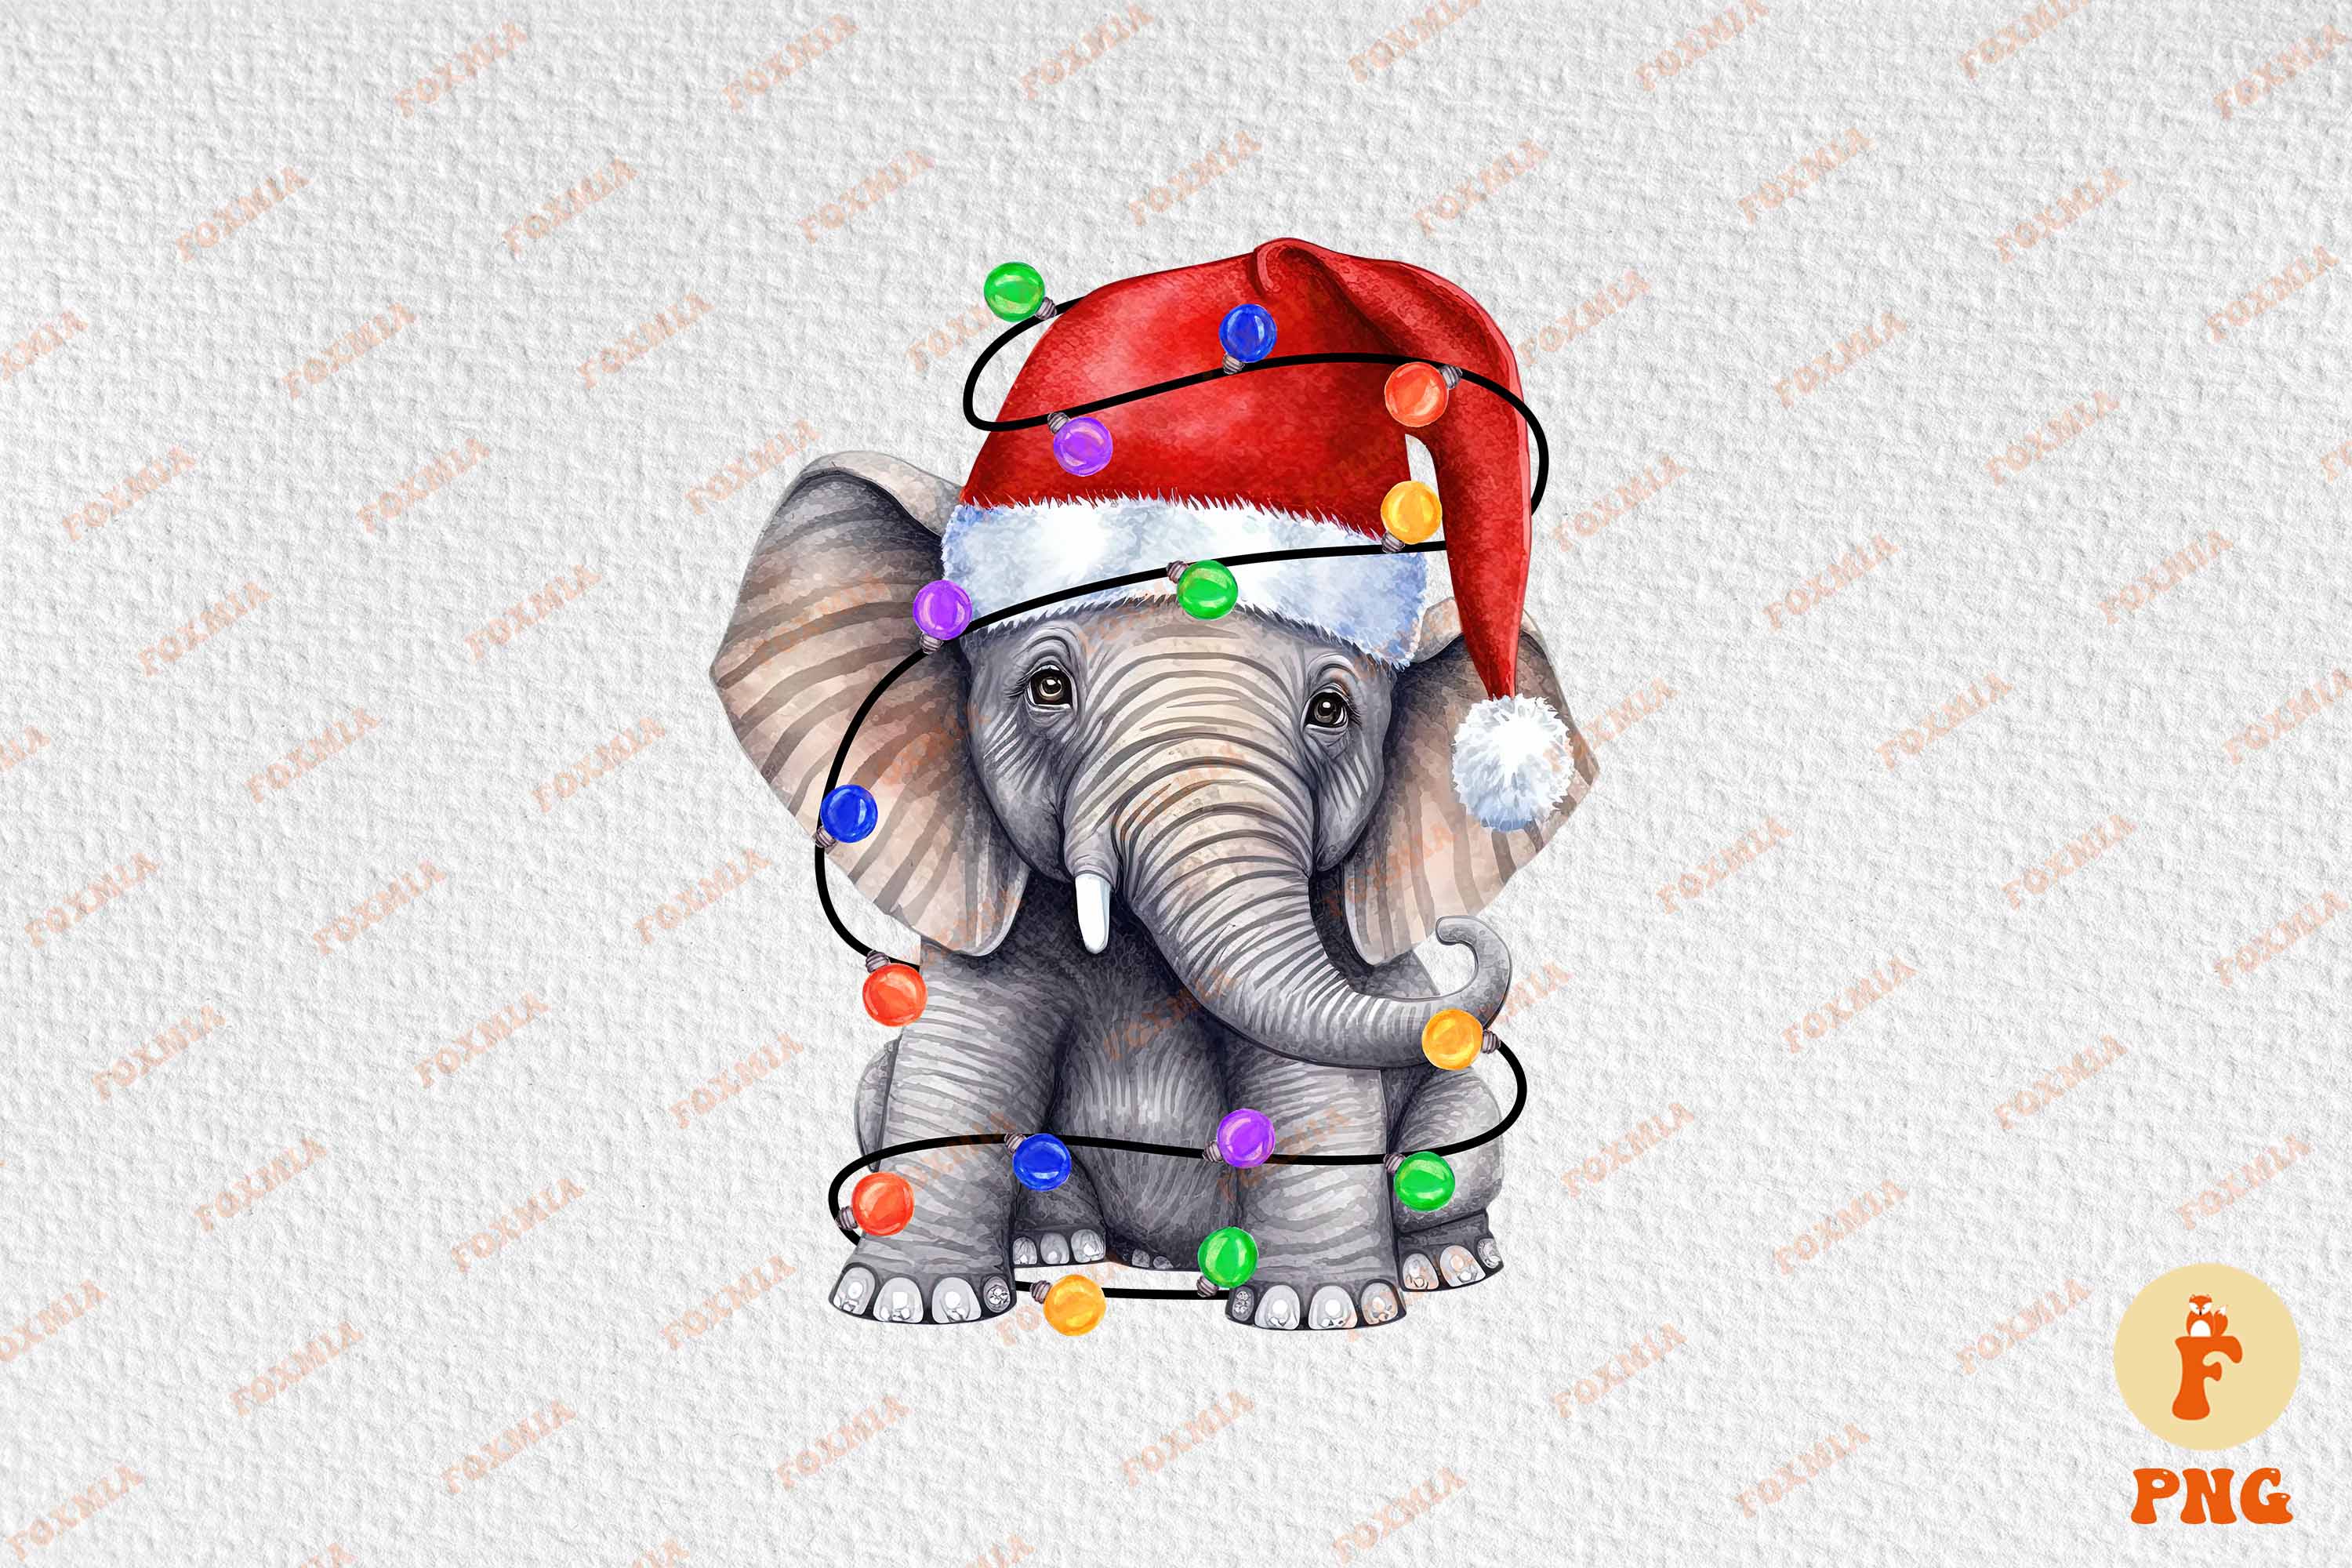 Amazing image of an elephant wearing a santa hat.